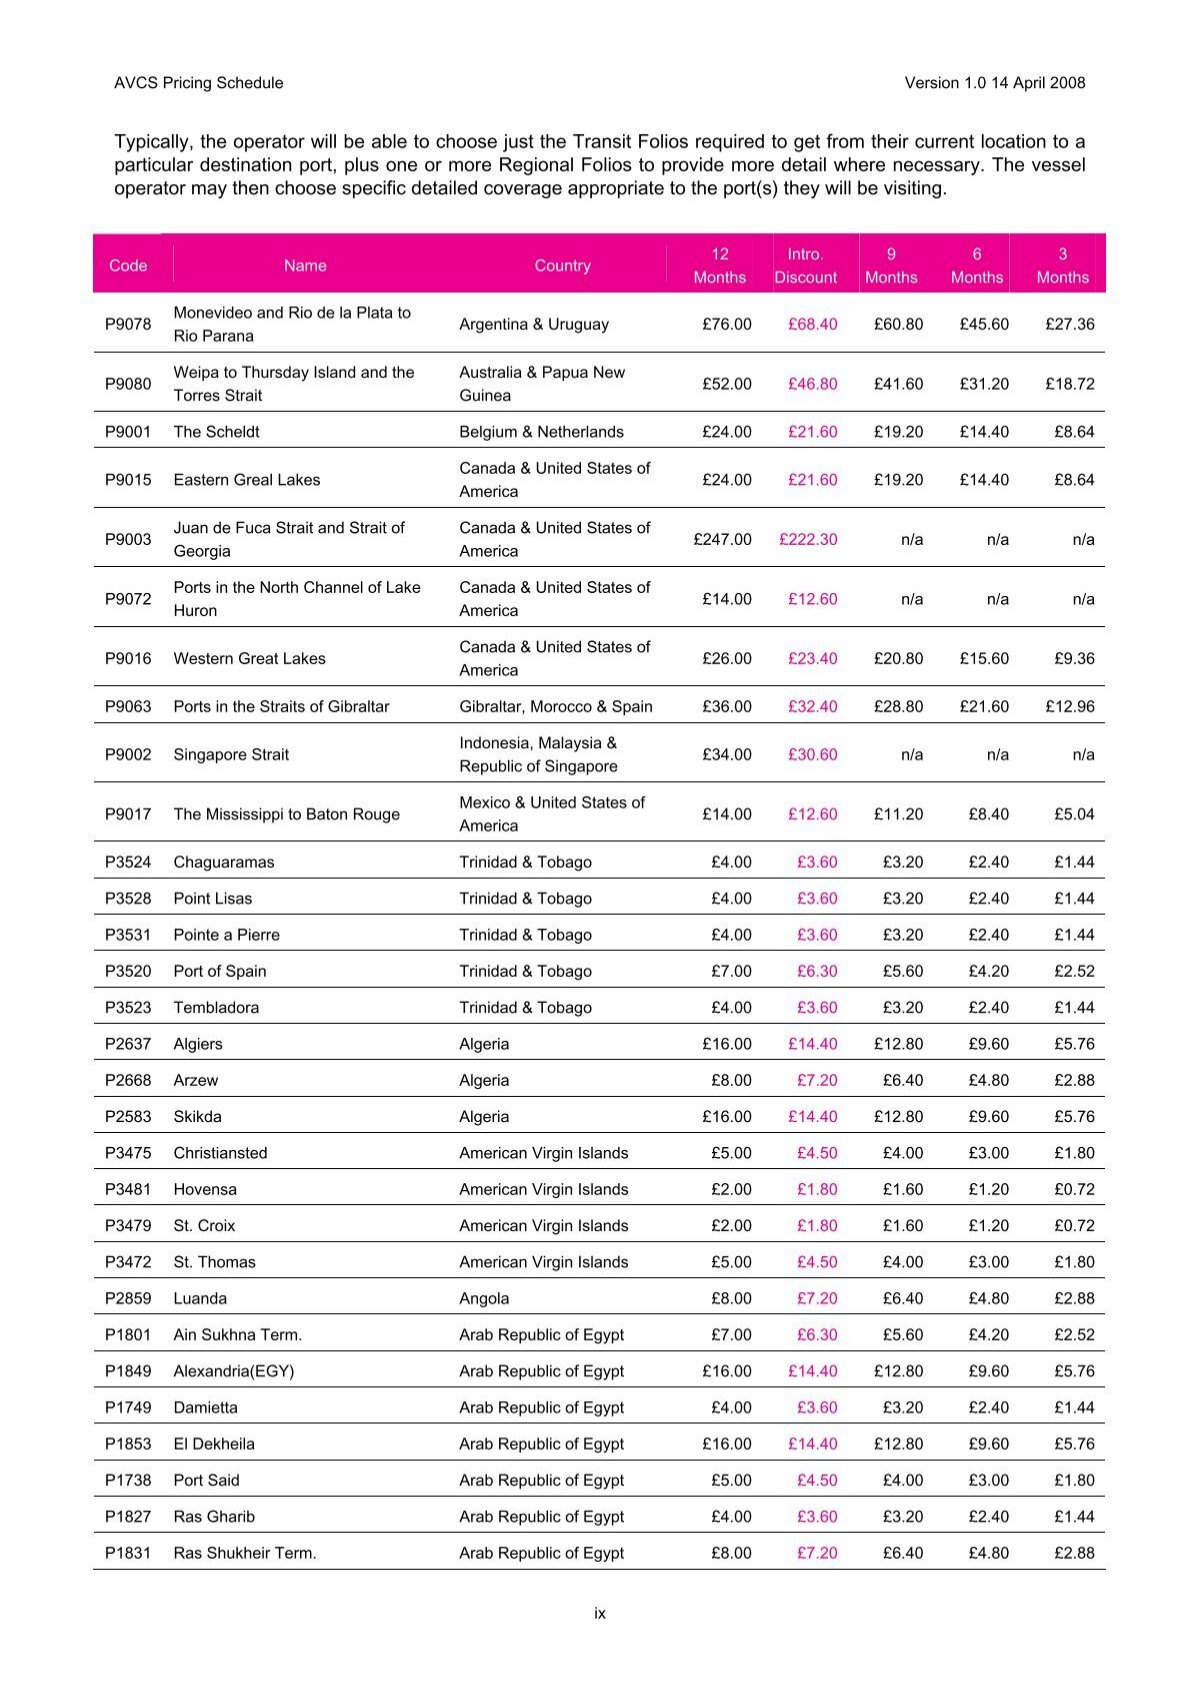 AVCS Pricing Schedule Ver